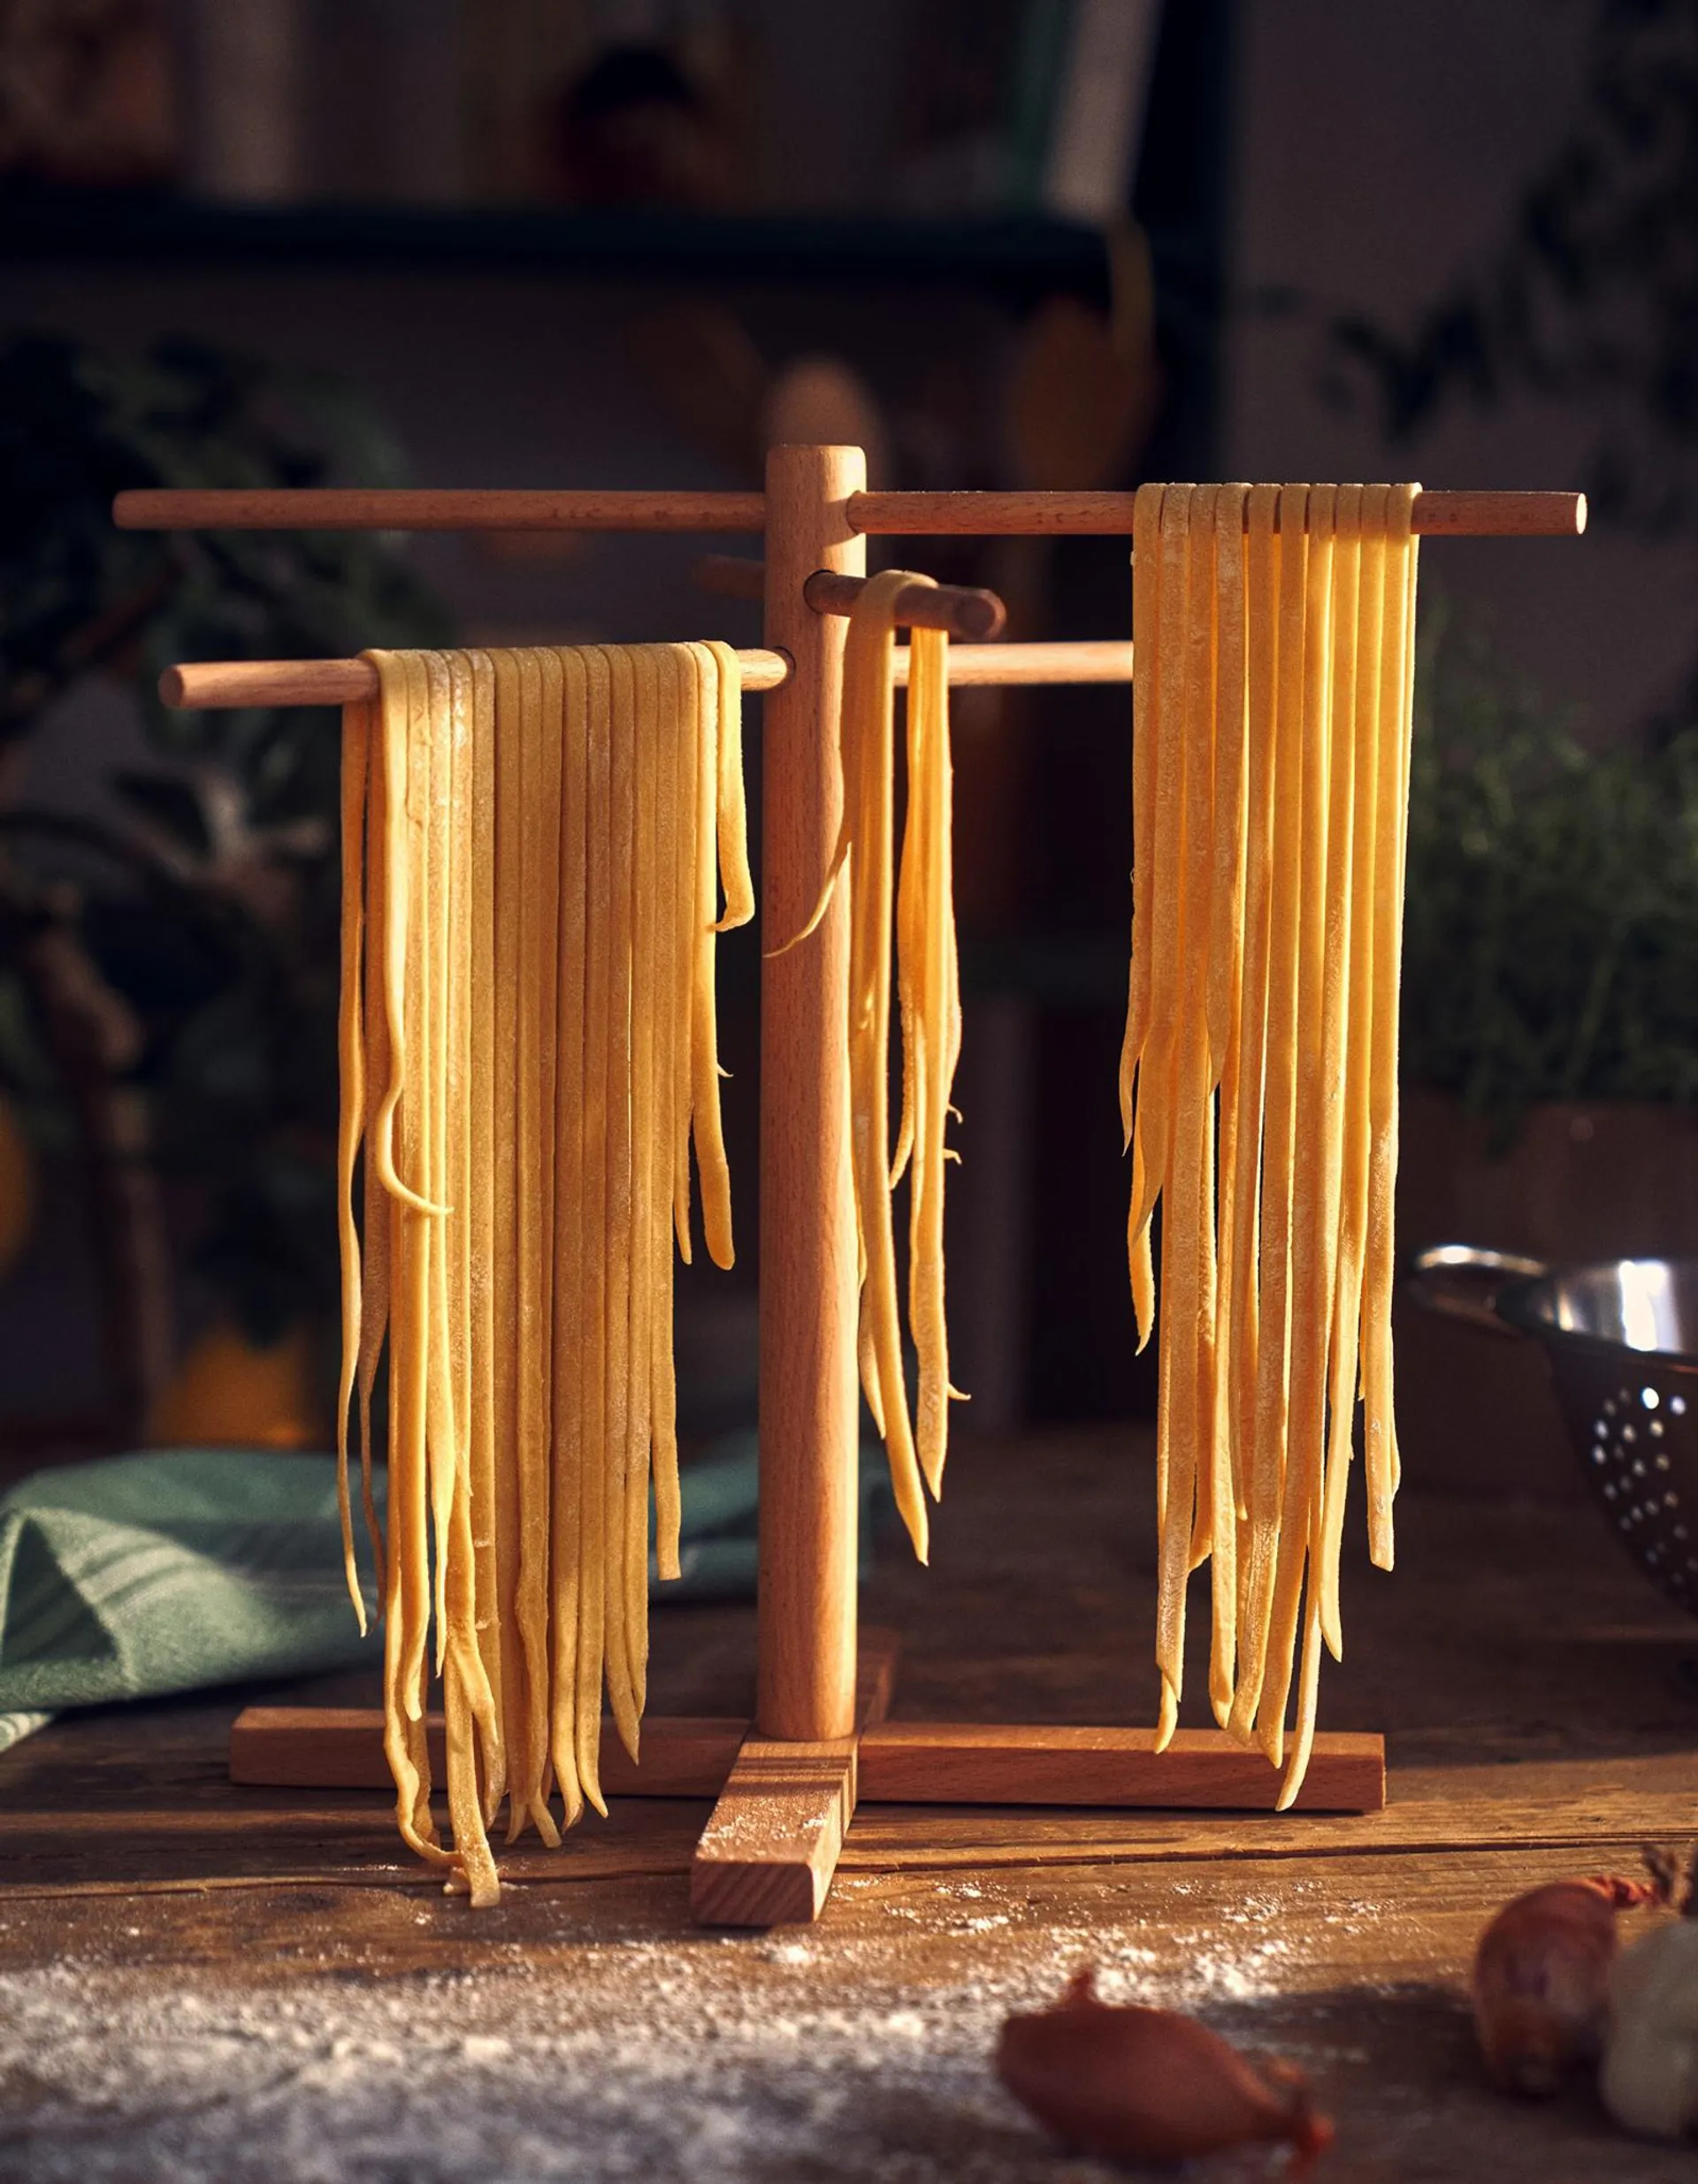 Pasta drying rack